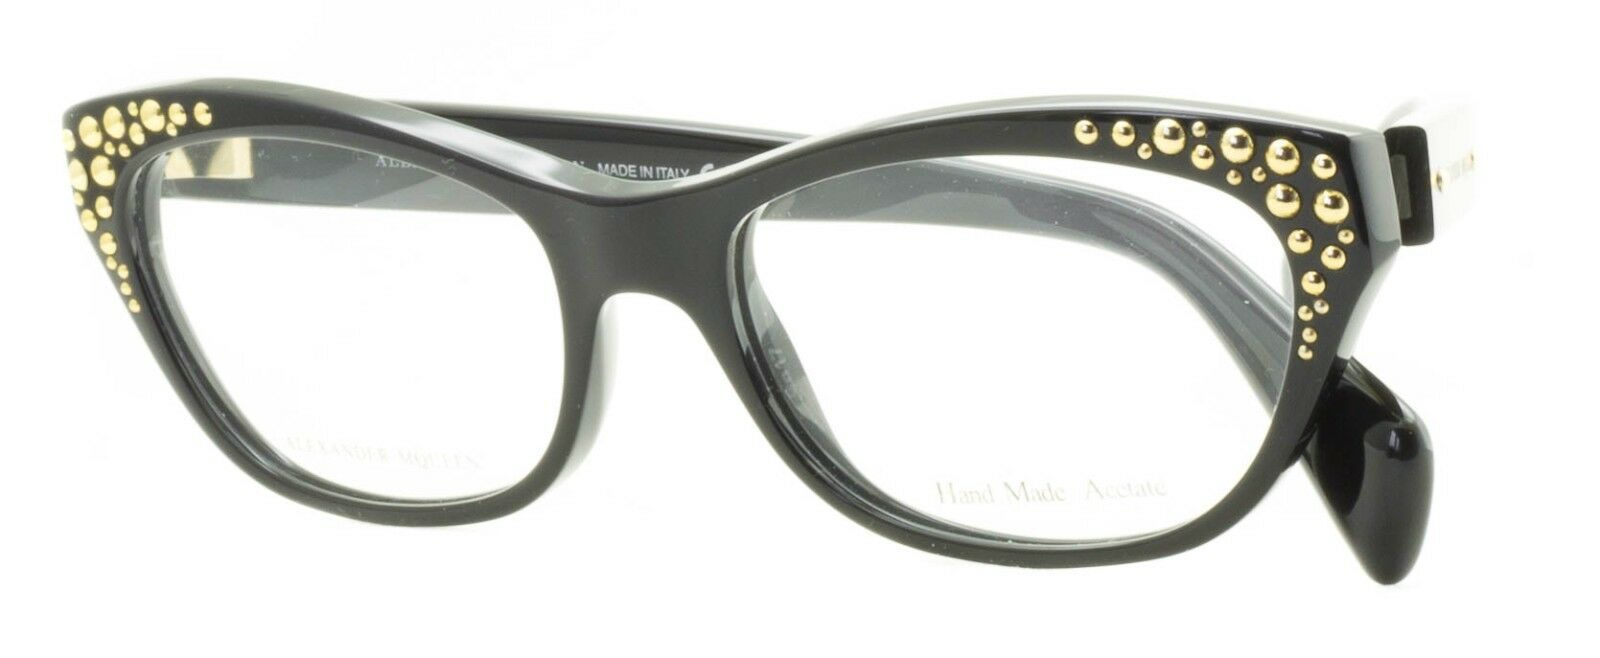 ALEXANDER McQUEEN AMQ 4222 807 Eyewear FRAMES RX Optical Eyeglasses Glasses -New